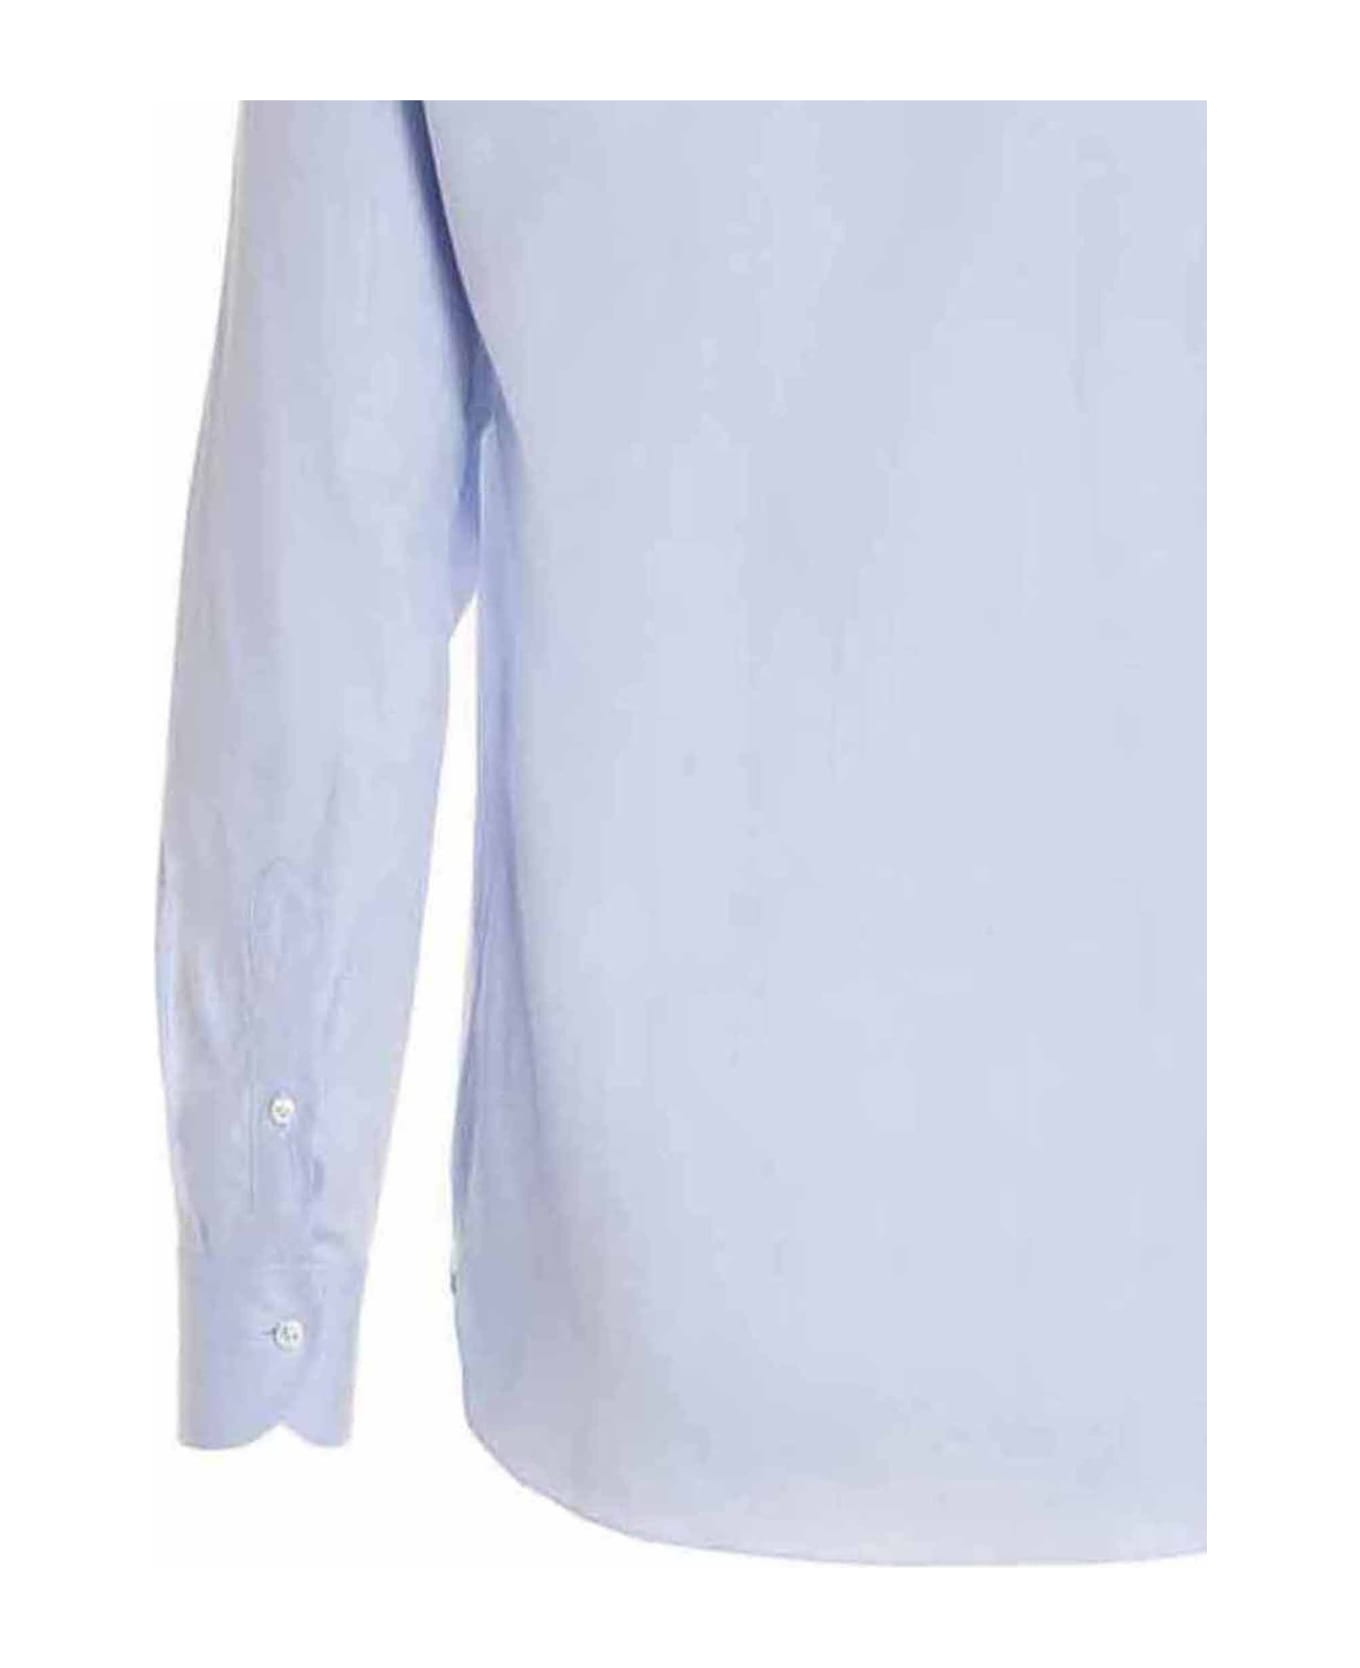 Borriello Napoli 'marechiaro' Shirt - Light Blue